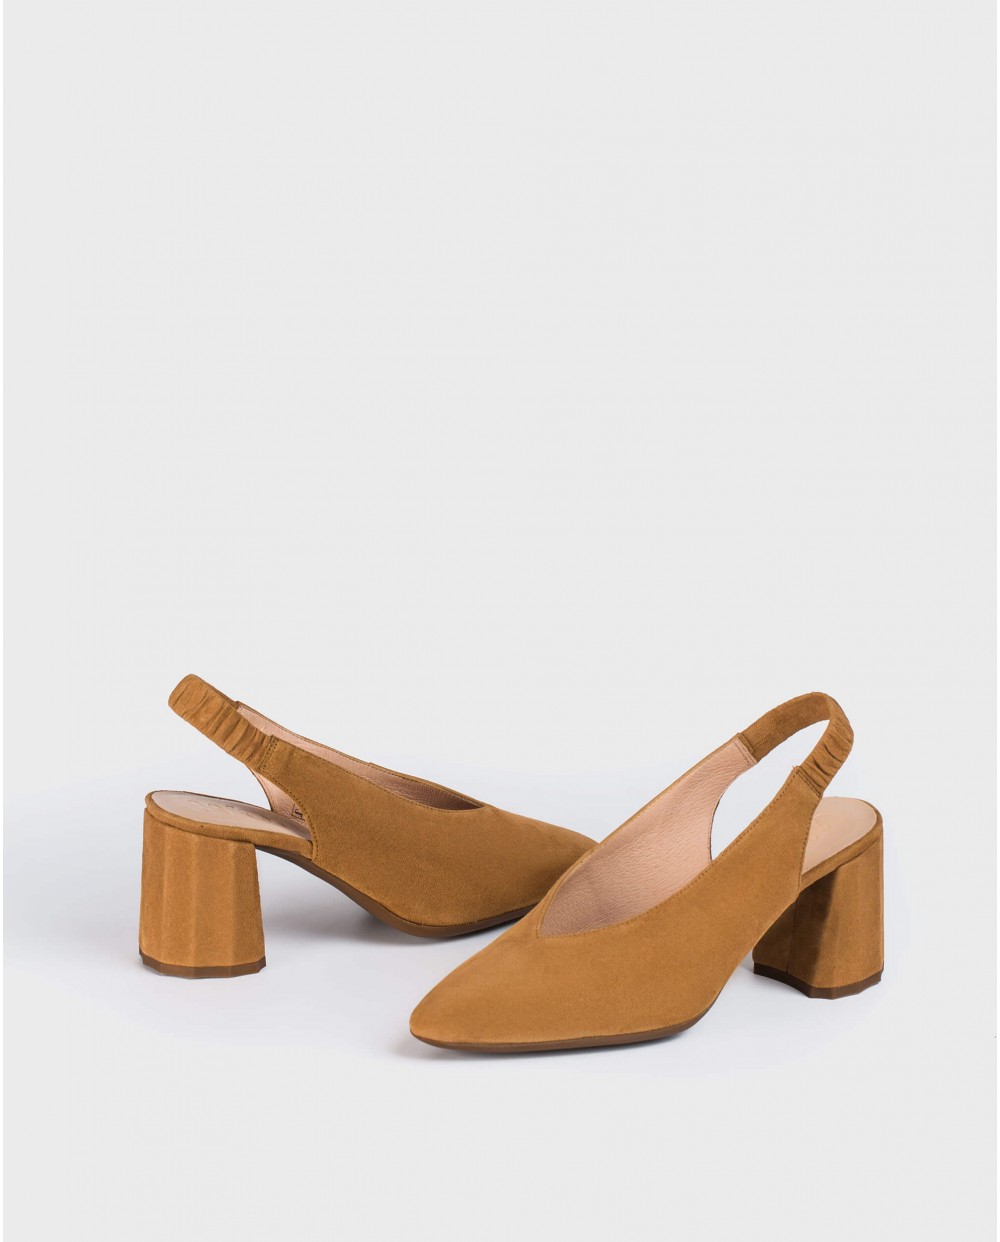 Wonders-Heels-V cut leather court shoe